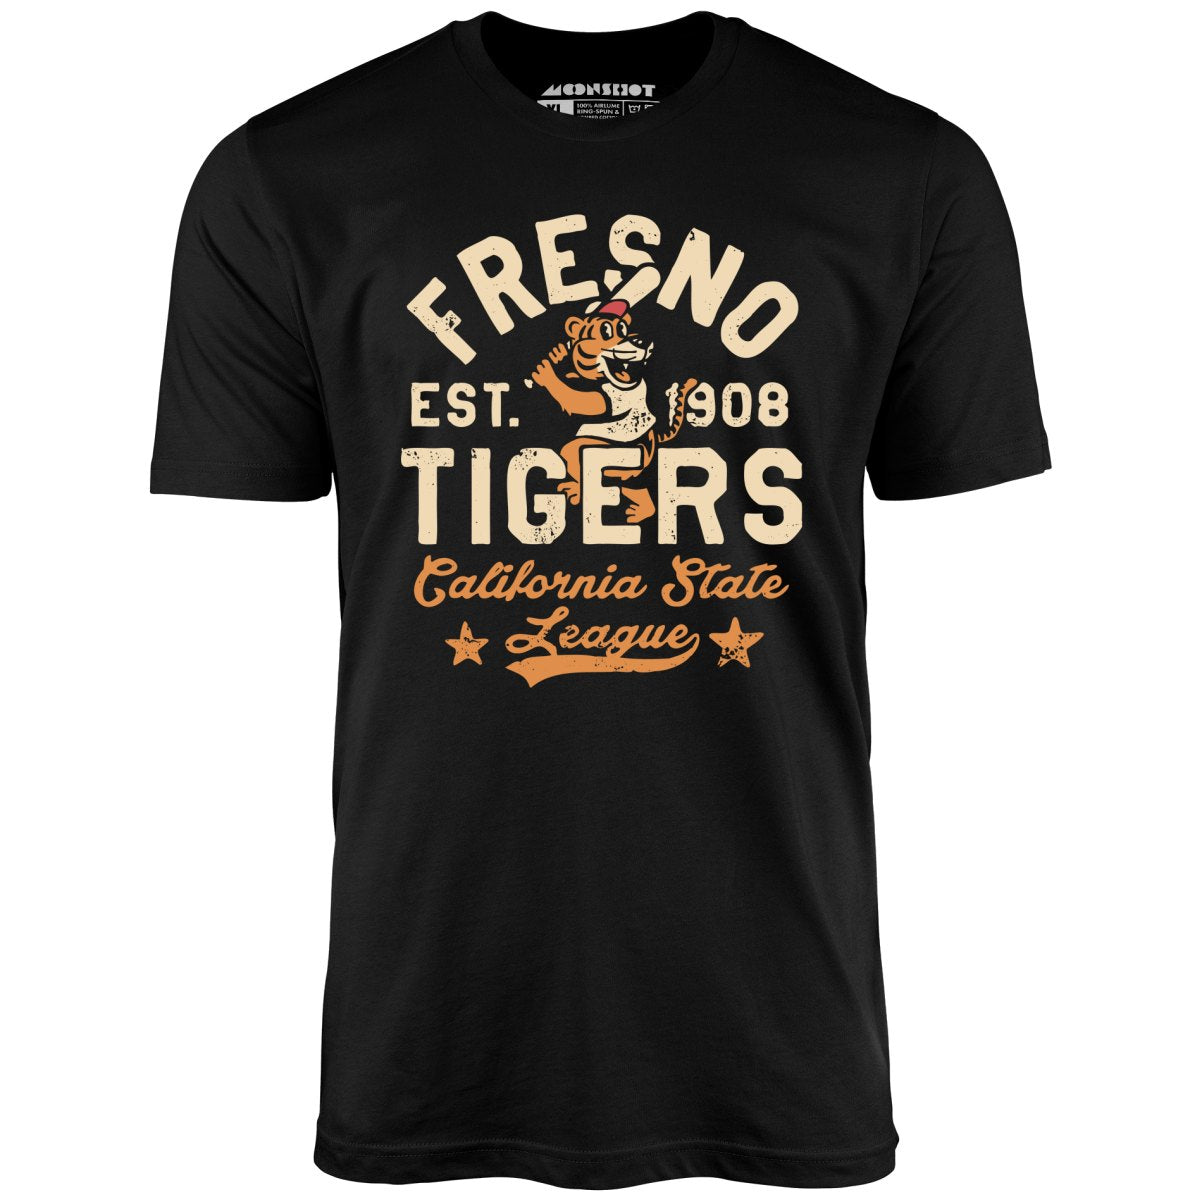 Fresno Tigers - California - Vintage Defunct Baseball Teams - Unisex T-Shirt